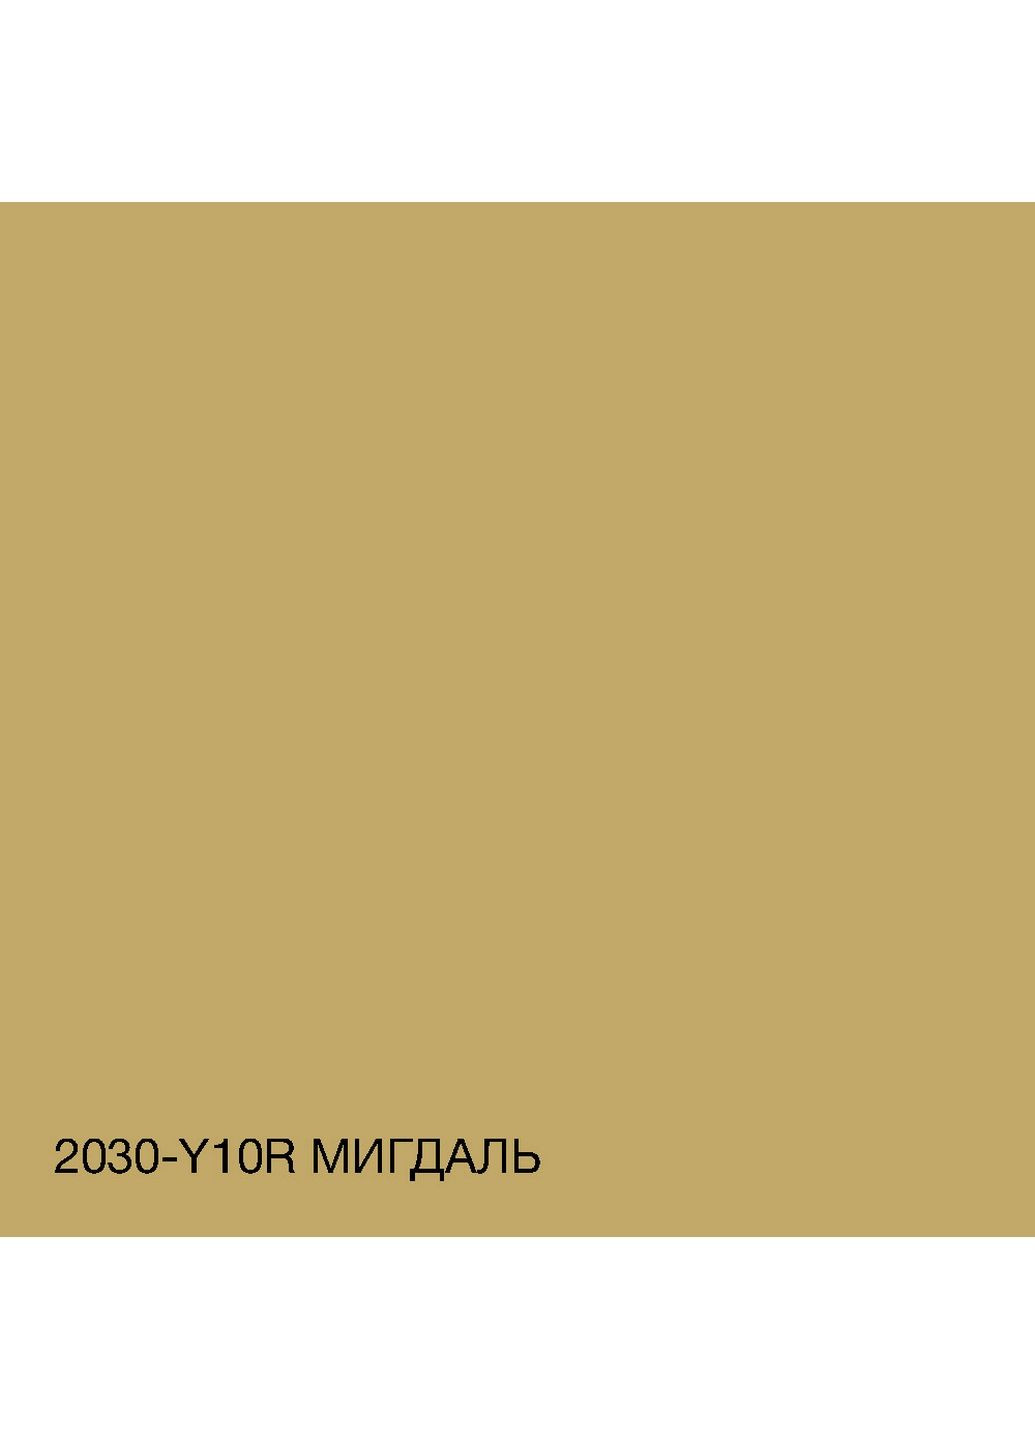 Фасадна фарба акрил-латексна 2030-Y10R 3 л SkyLine (289369606)